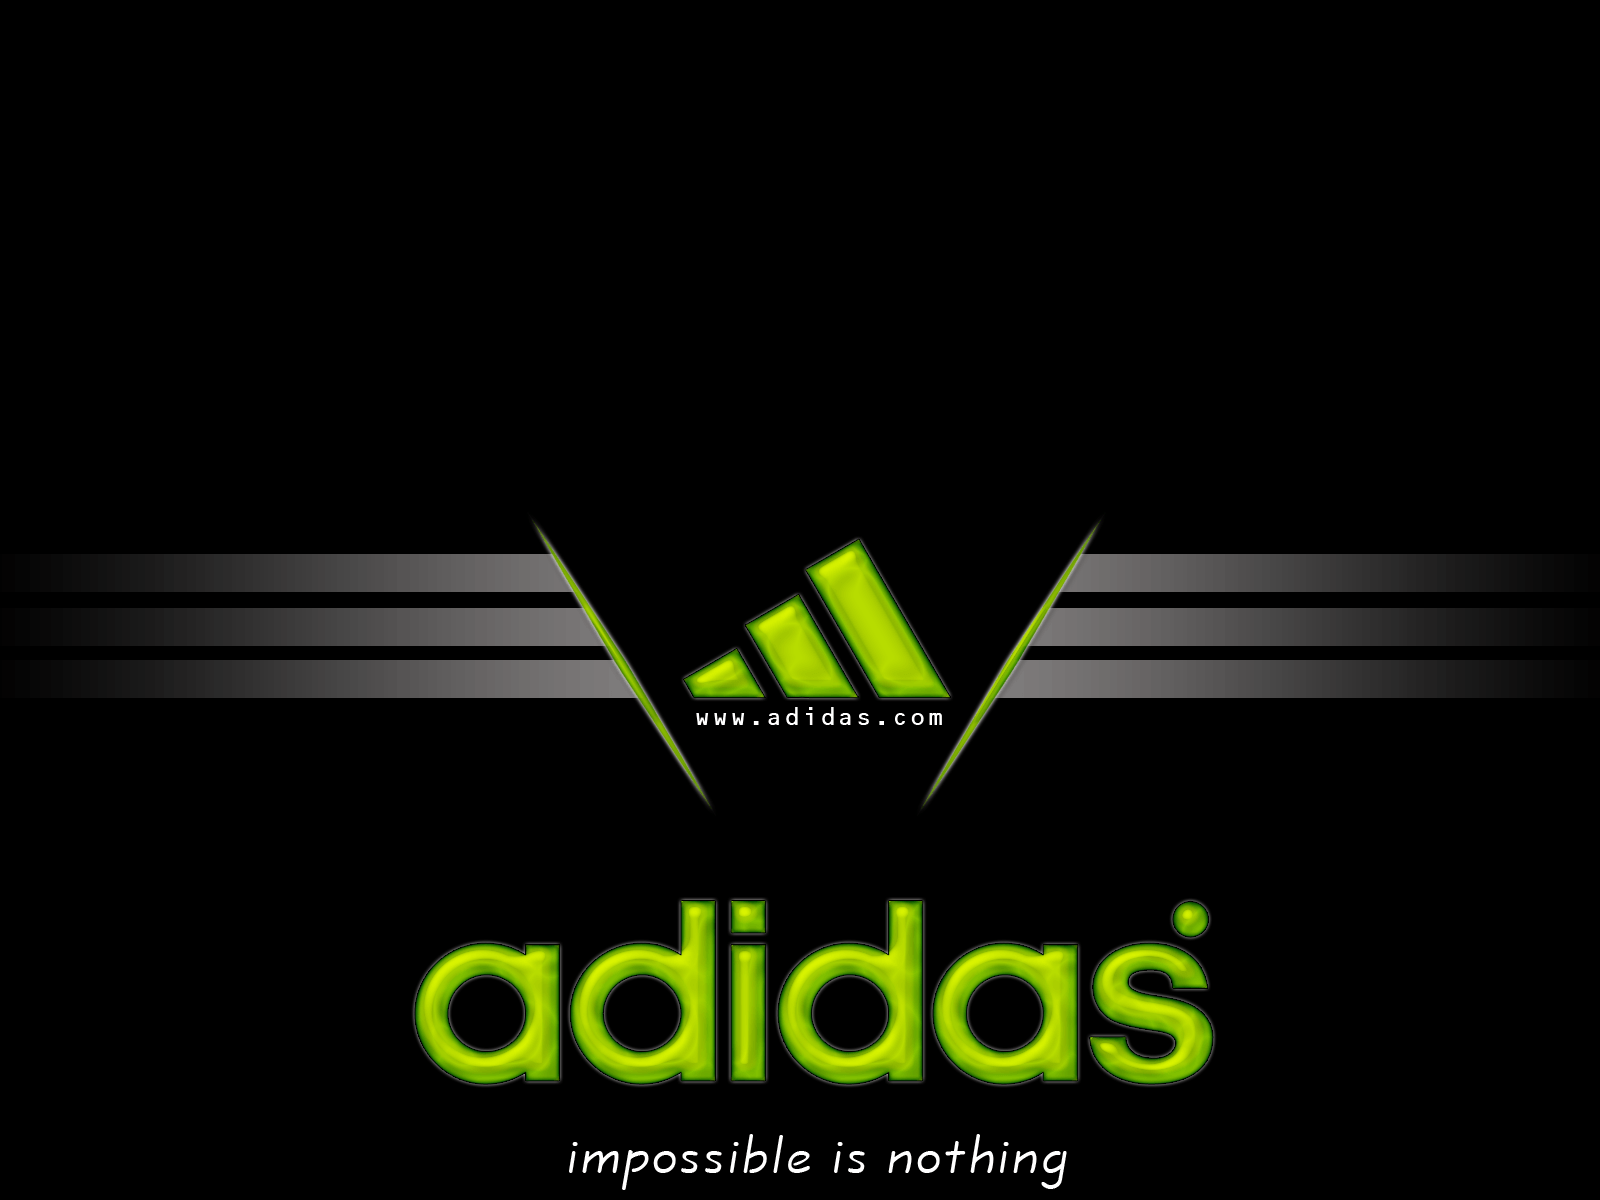 Free Adidas Logo Wallpaper. Proyectos que intentar